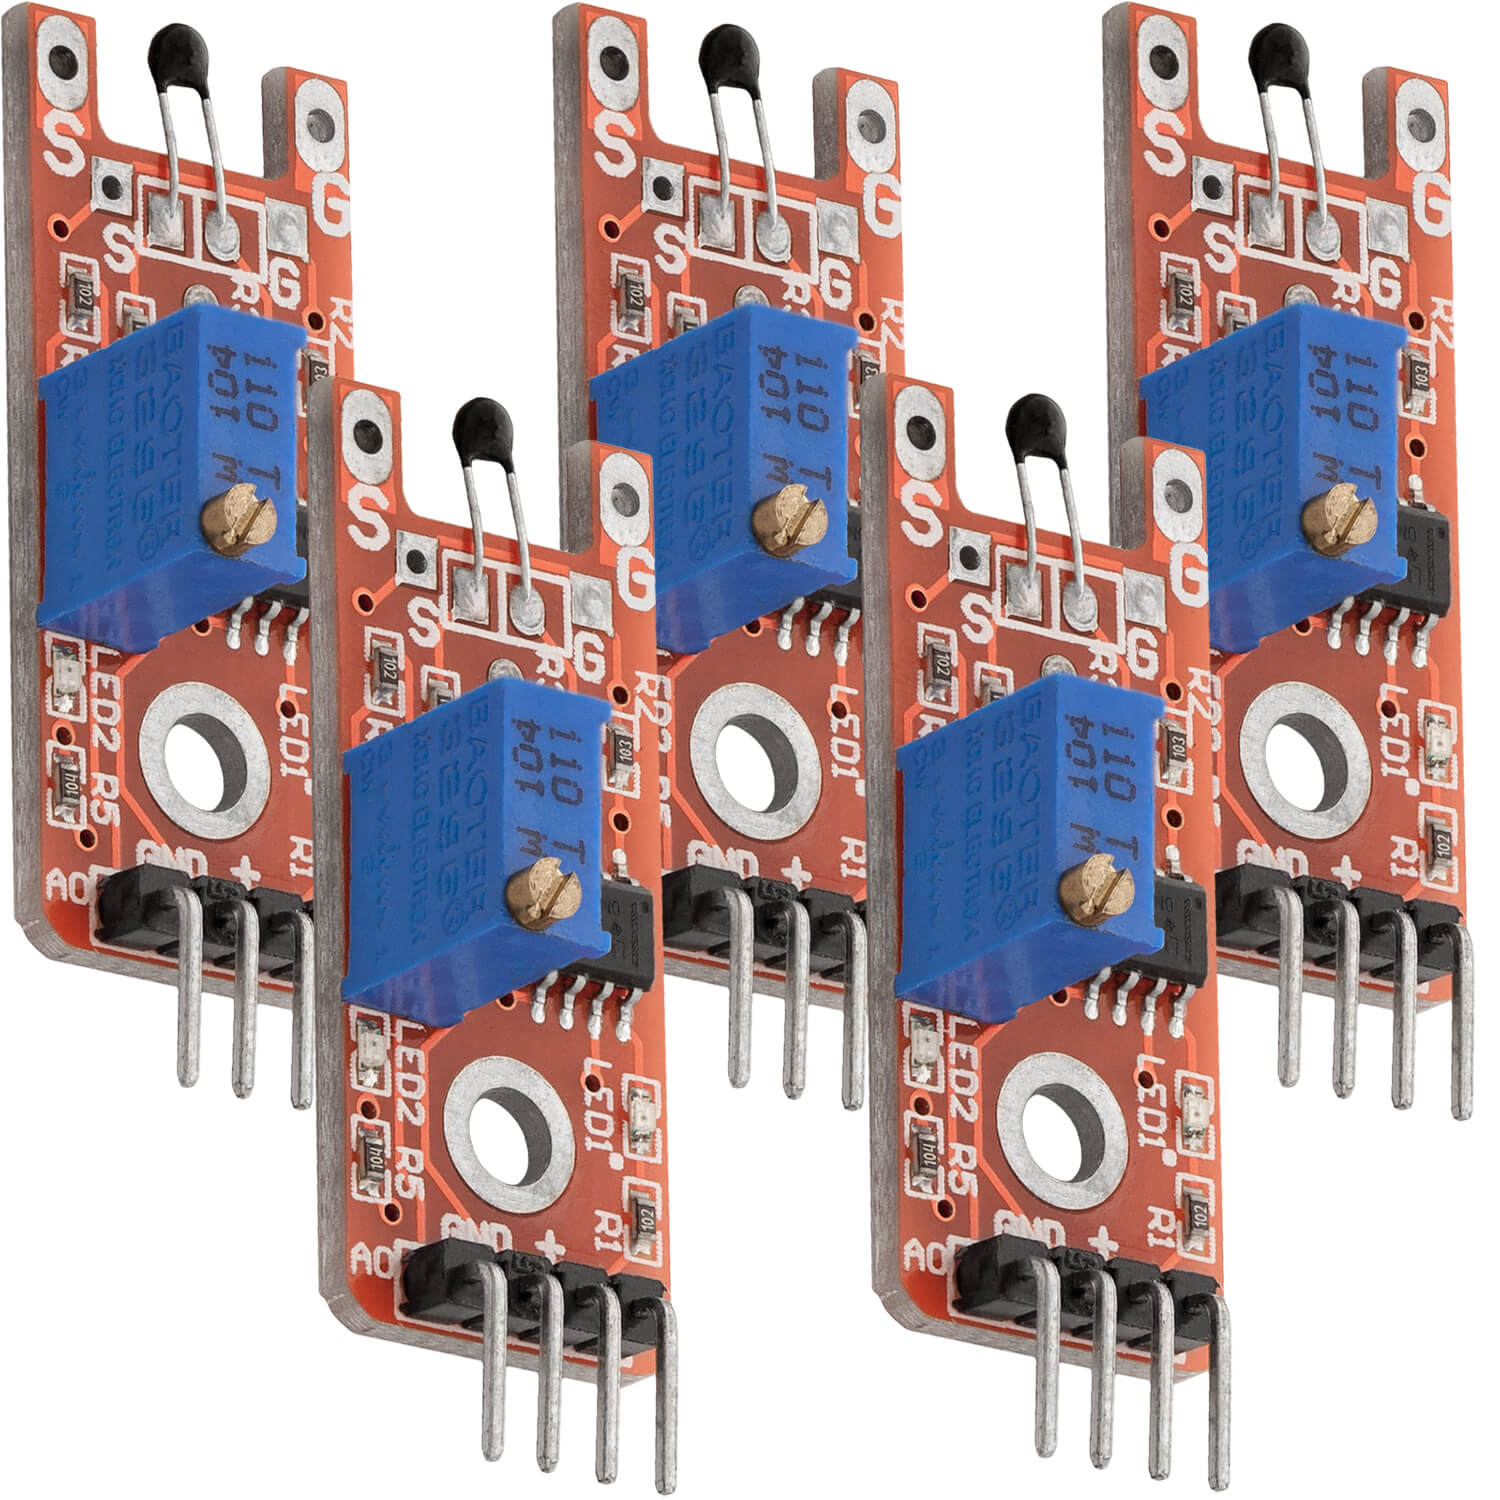 KY-028 Digital Temperature Sensor Module - ArduinoModulesInfo